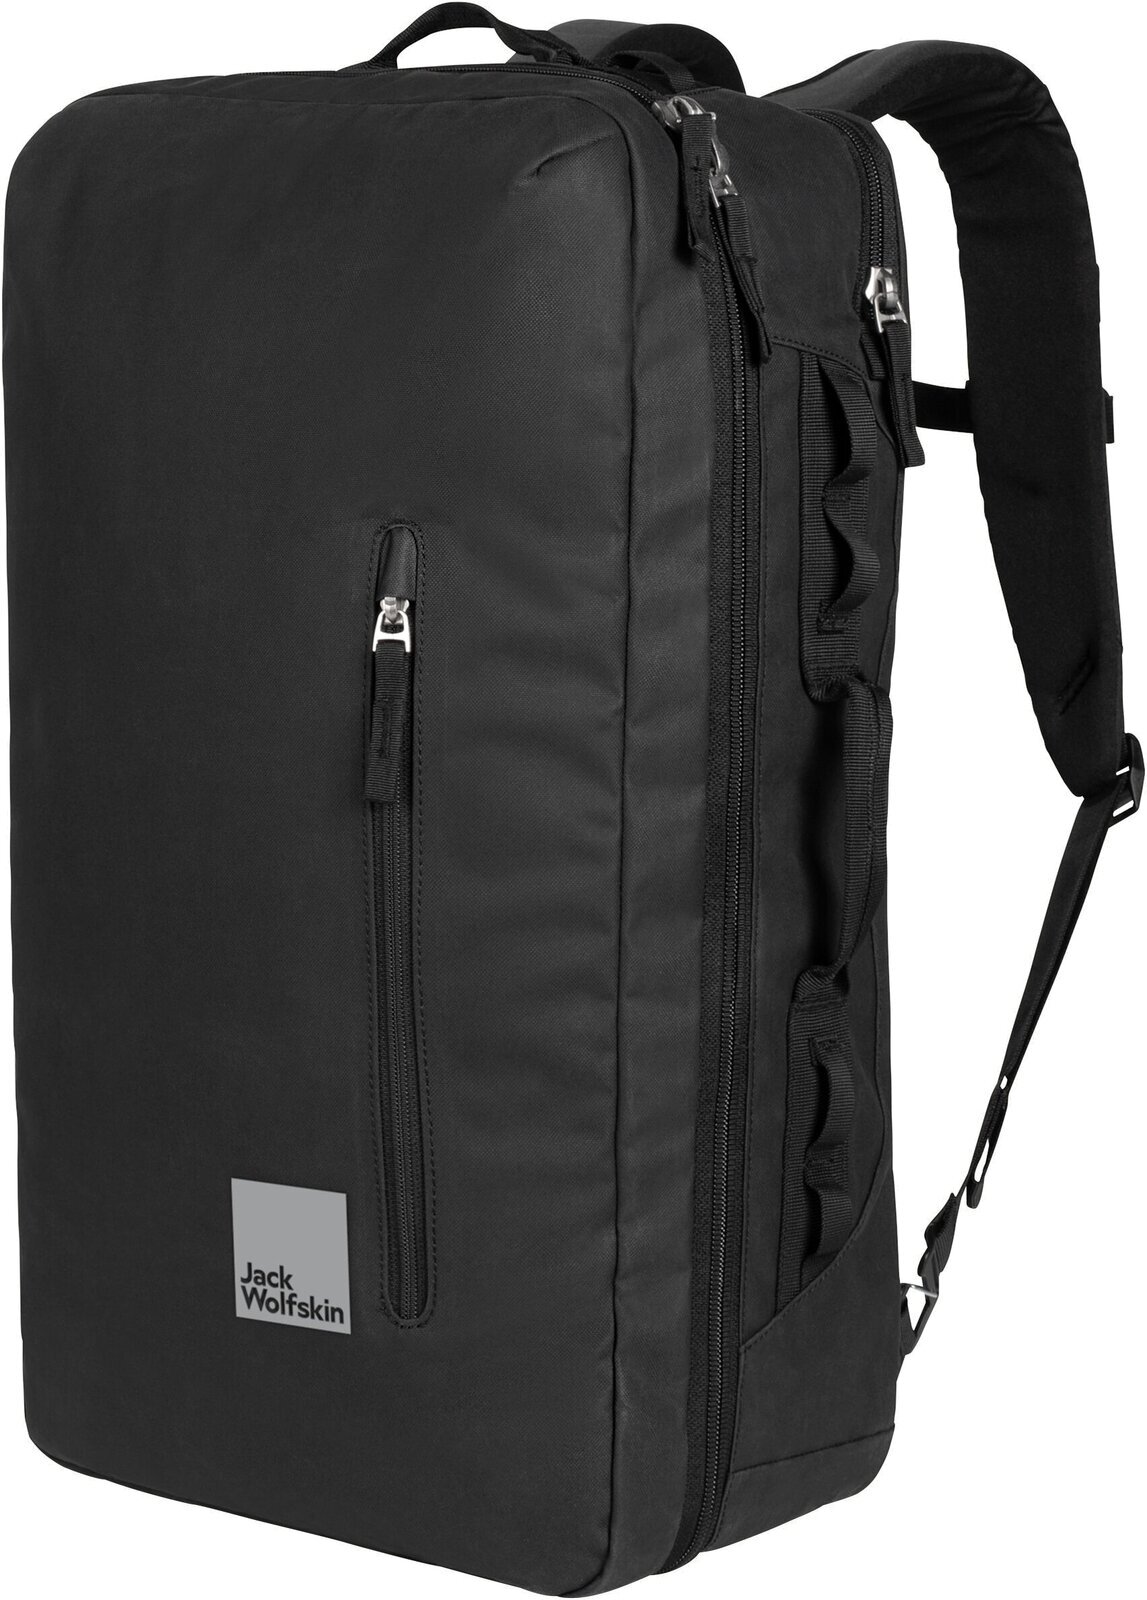 Lifestyle sac à dos / Sac Jack Wolfskin Traveltopia Cabin Pack 40 Black 40 L Sac à dos